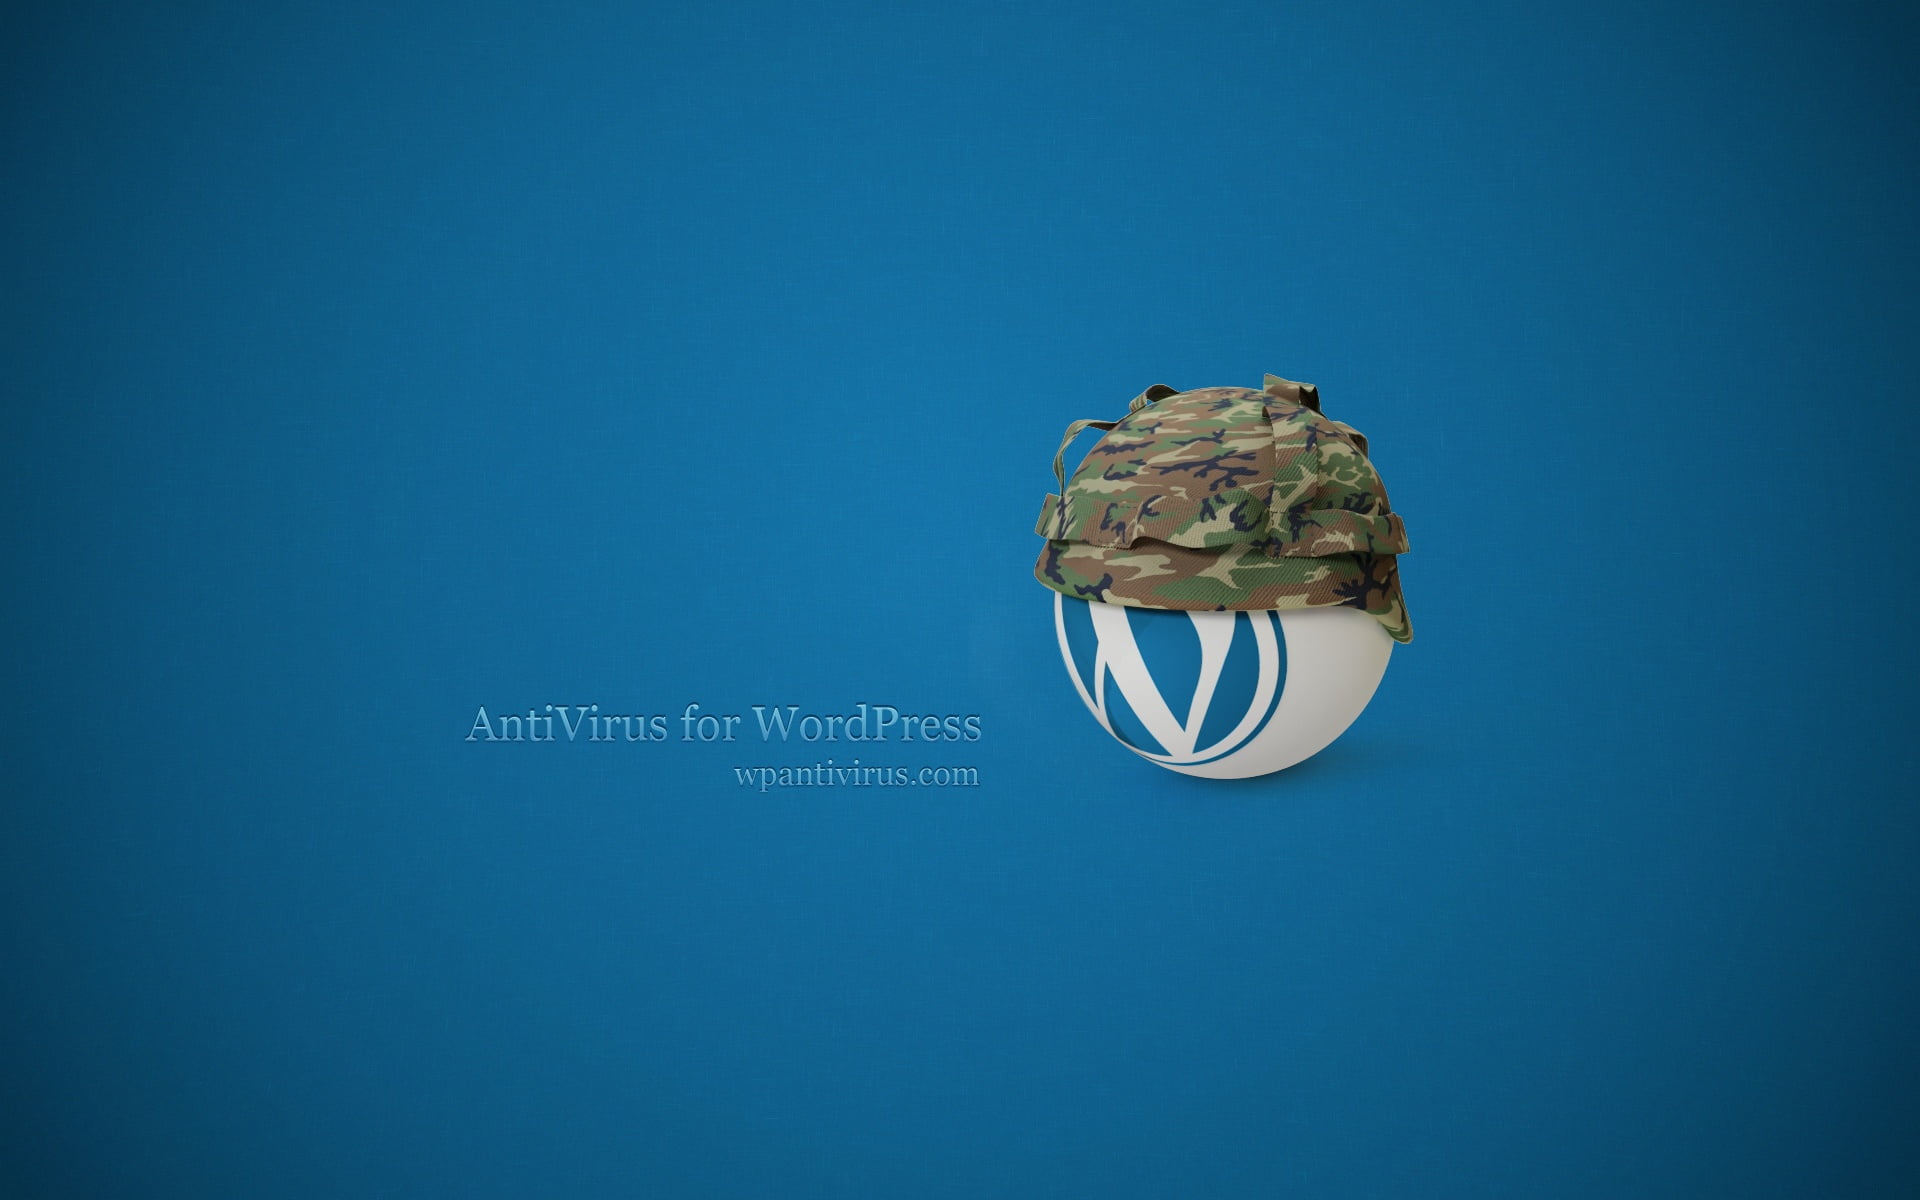 antivirus, wordpress, blue, copy space, indoors, blue background